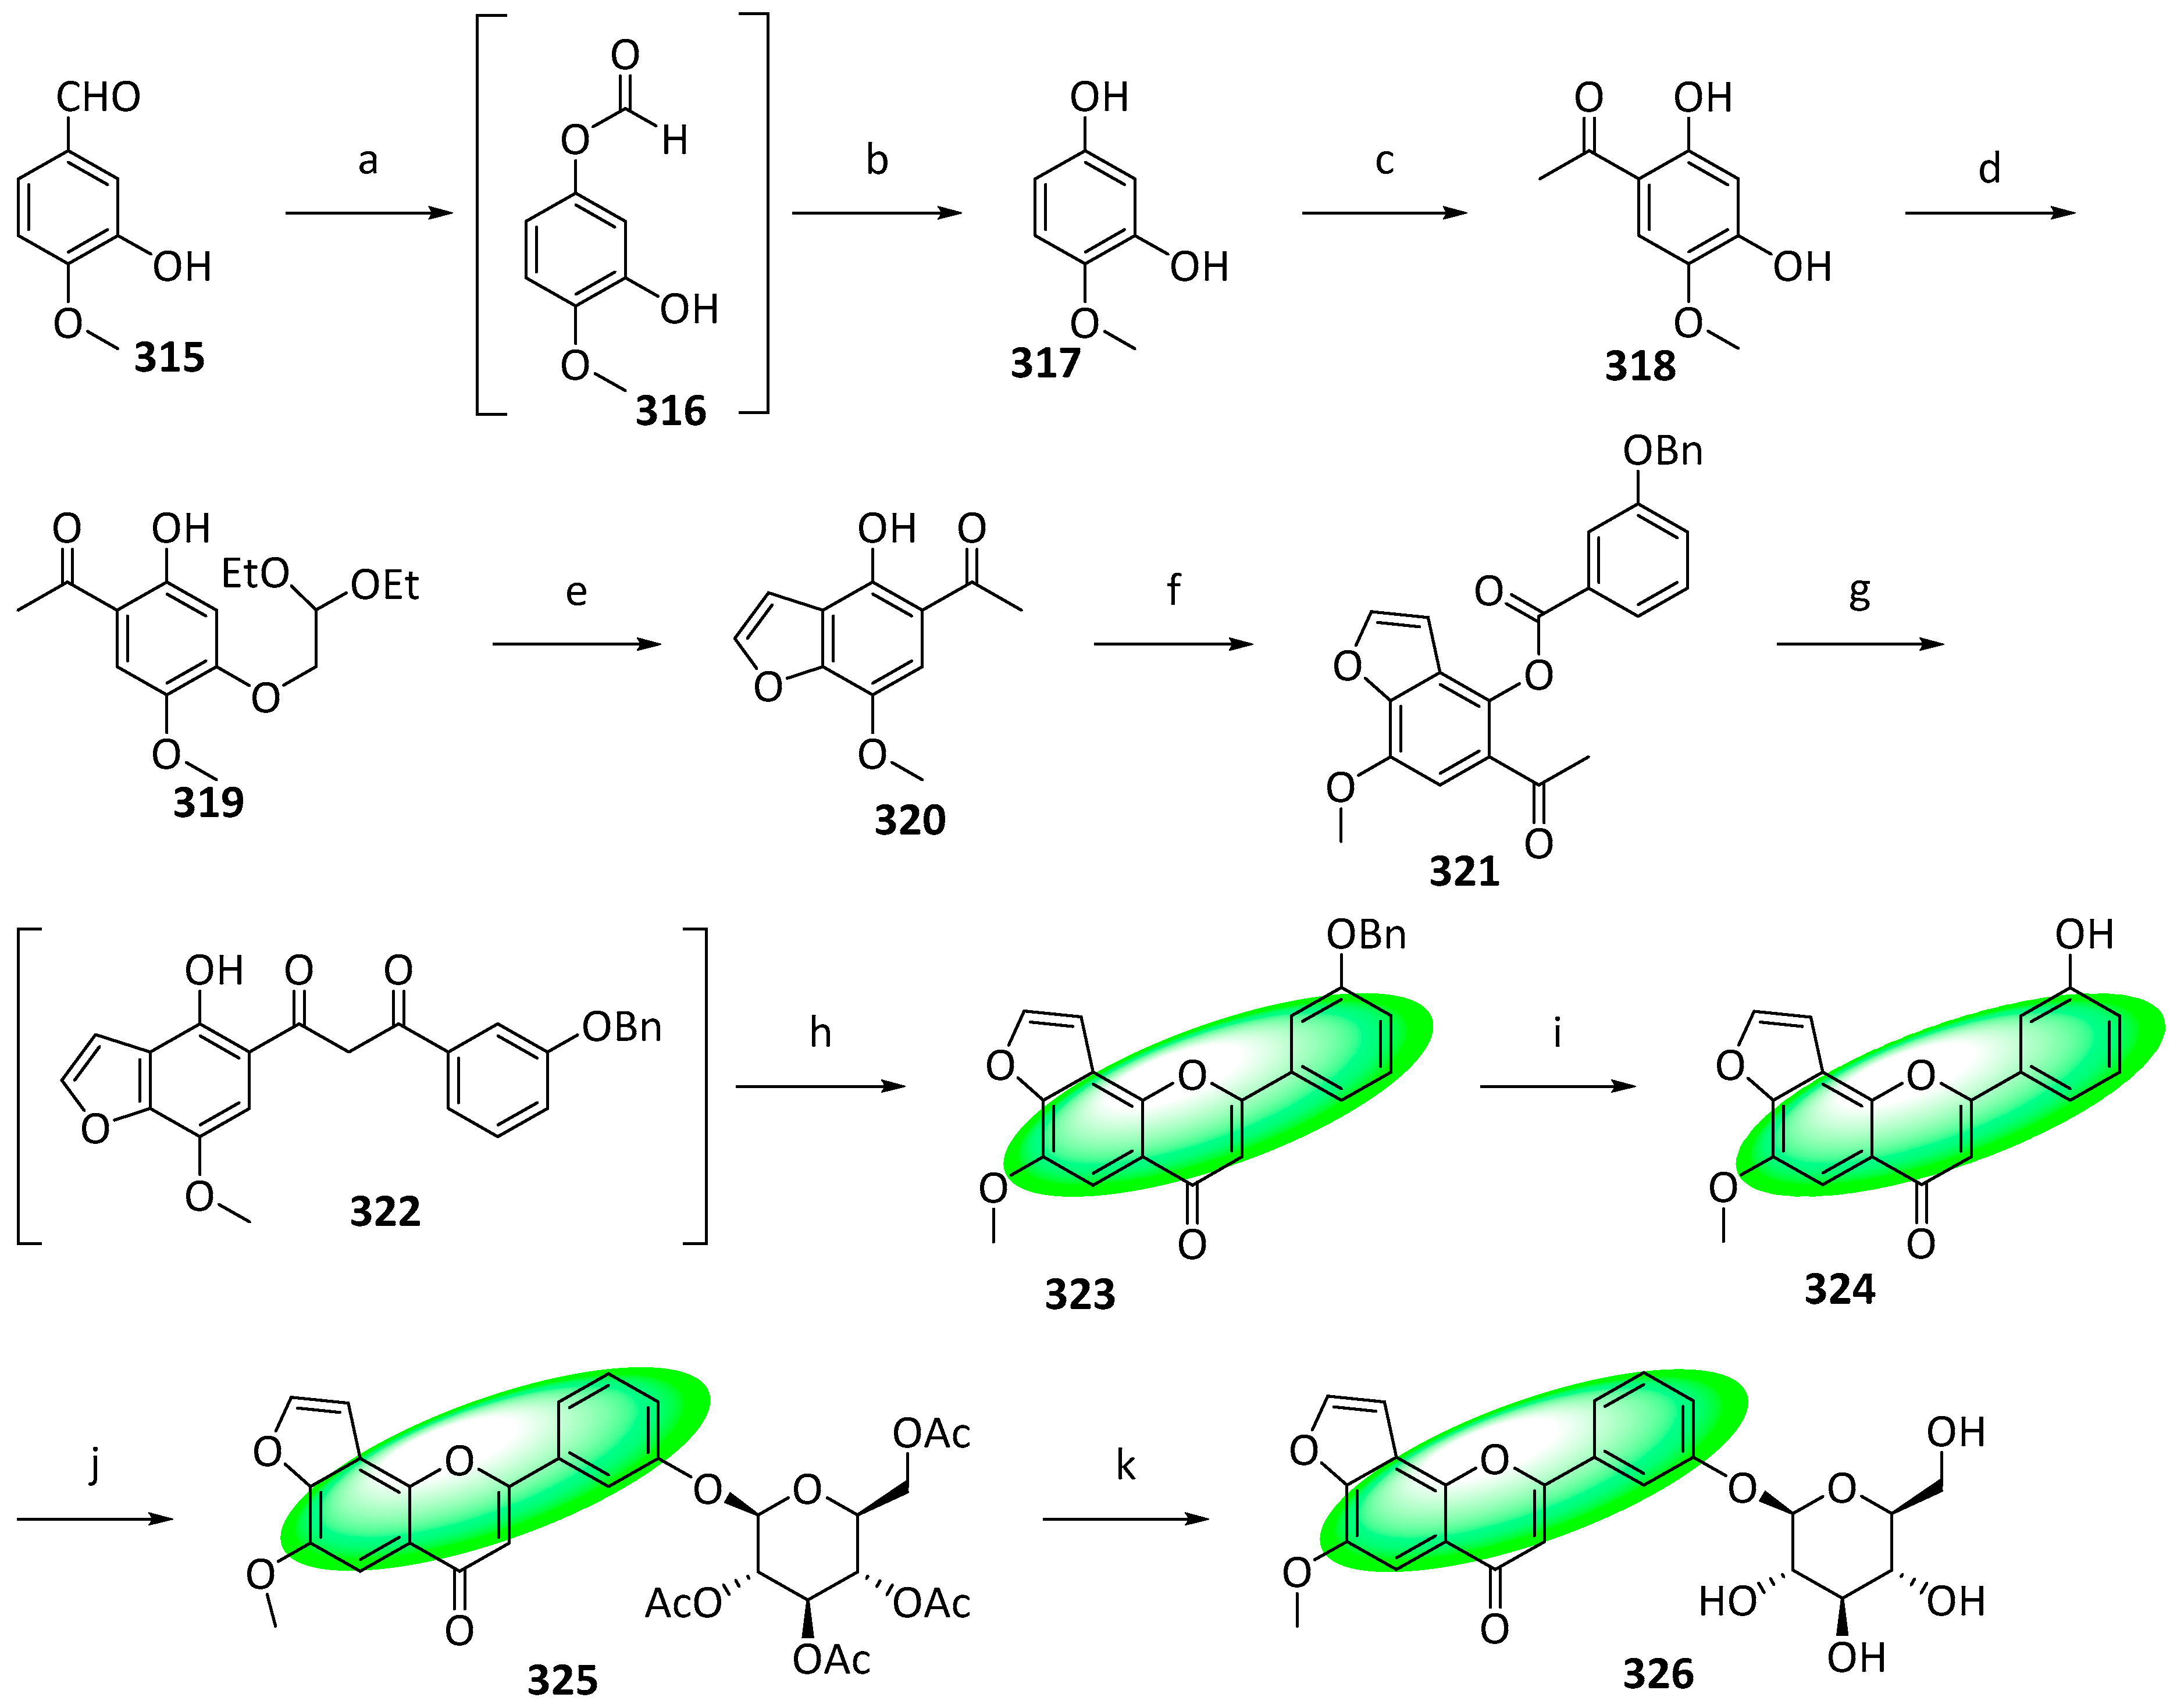 Prenylated Phenolic Compounds from the Aerial Parts of Glycyrrhiza